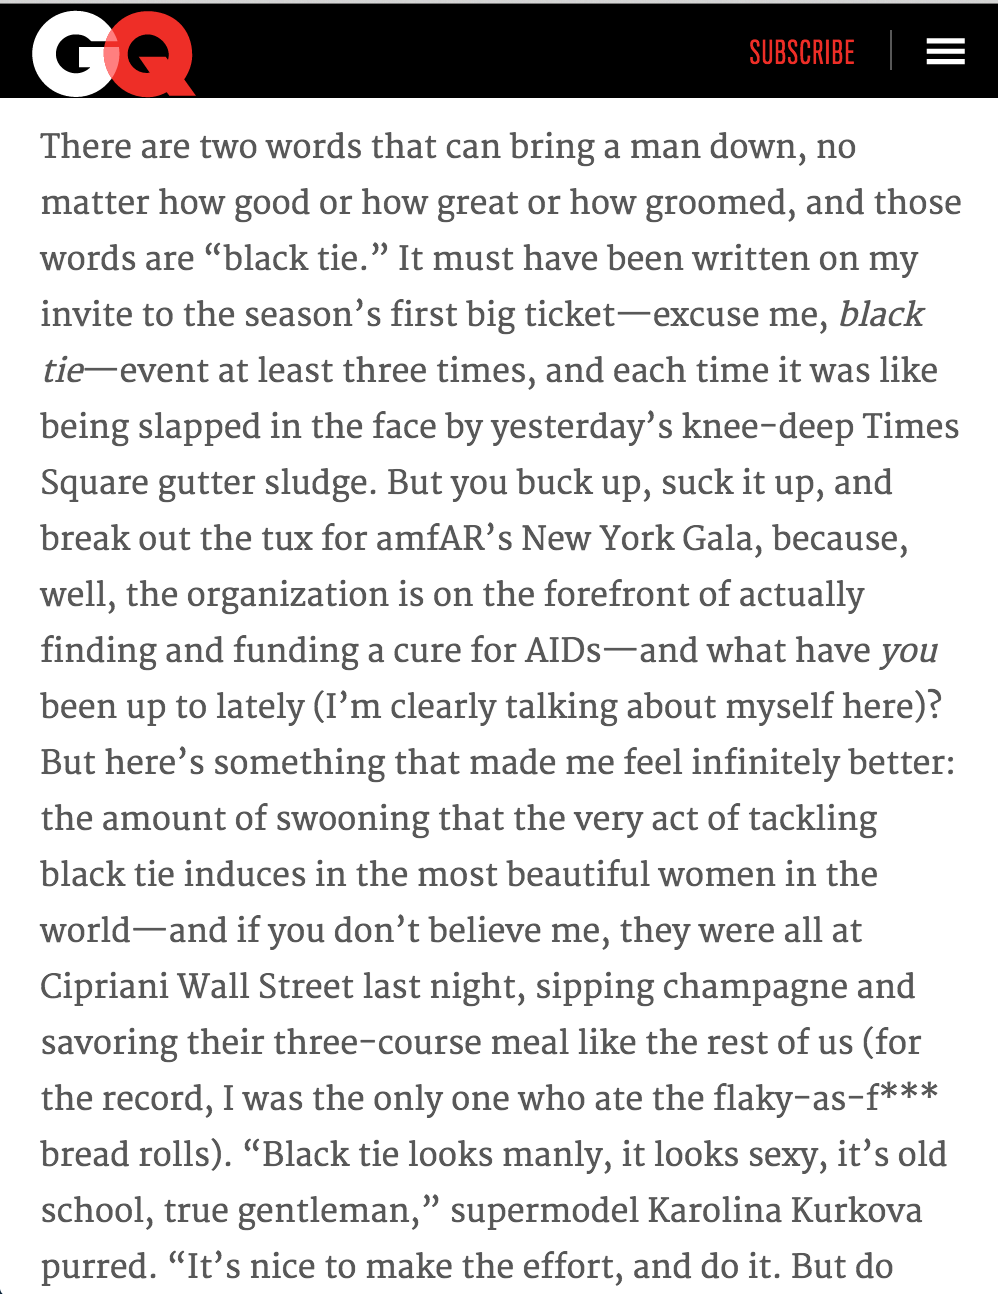  Man About Town: Black Tie Dressing, Model Behavior, and the amfAR New York Gala  February 2014   GQ.COM  